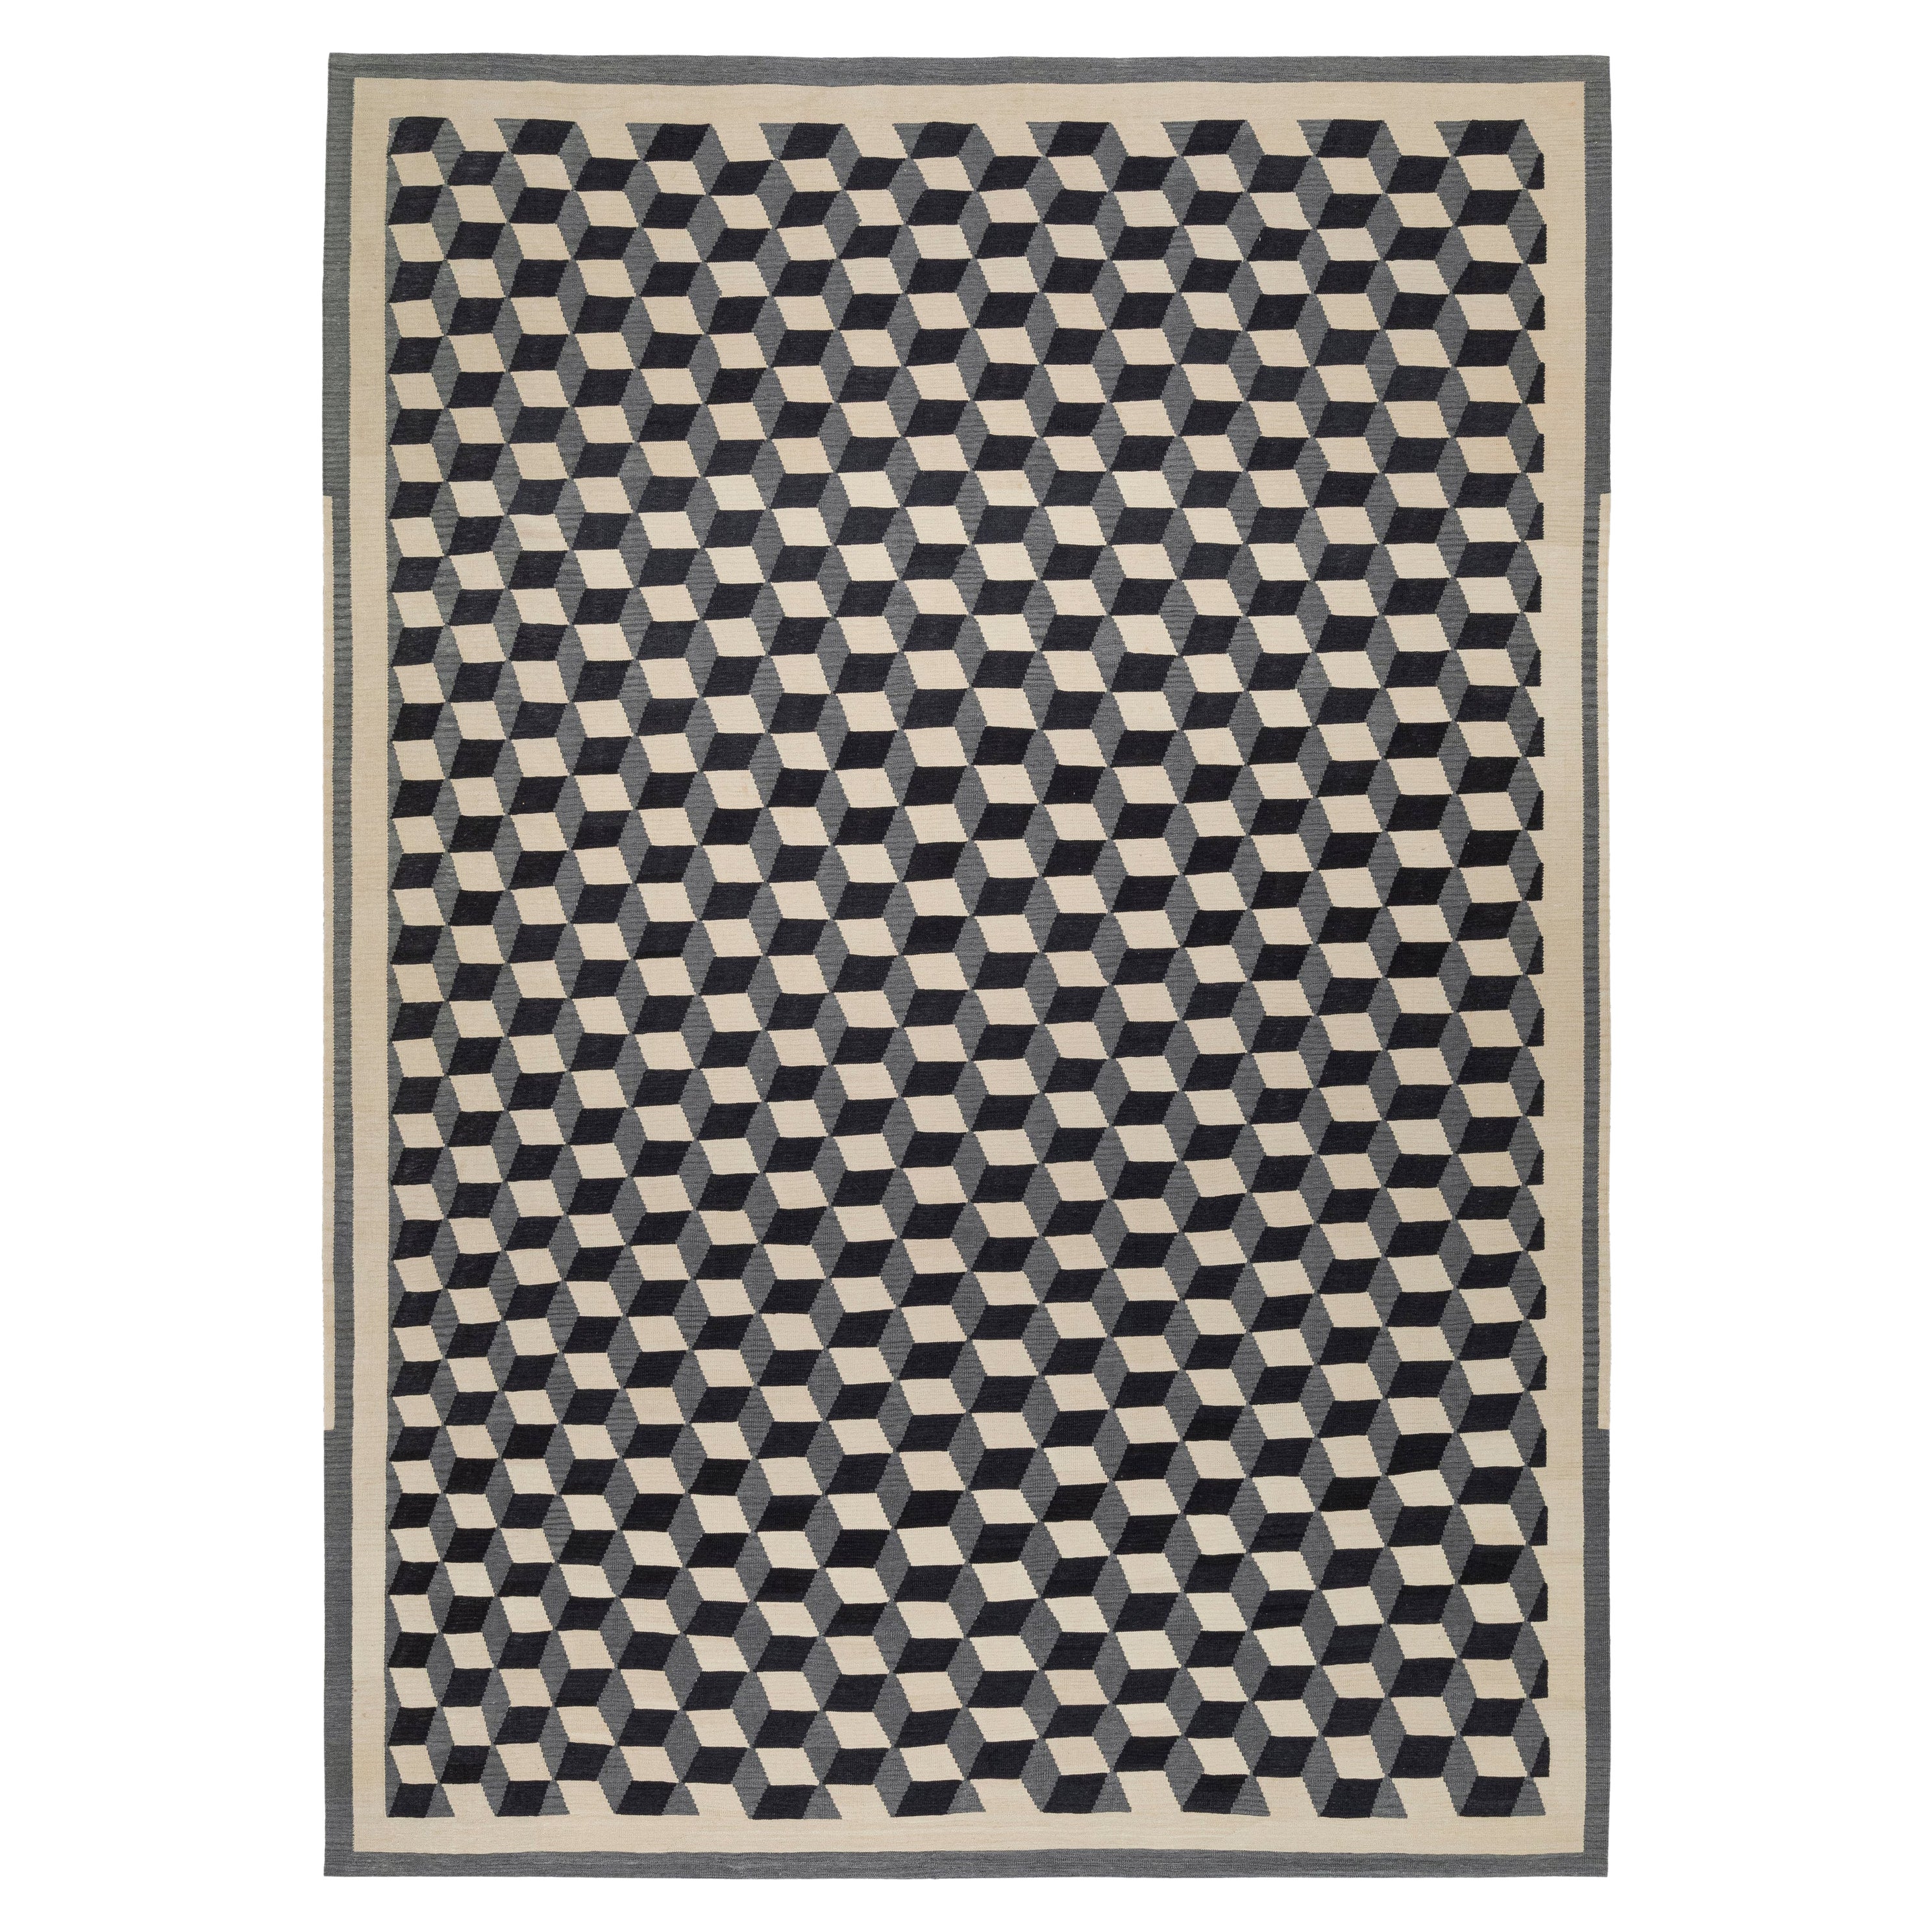 Geometric Cubist Checkered Flatweave Rug For Sale